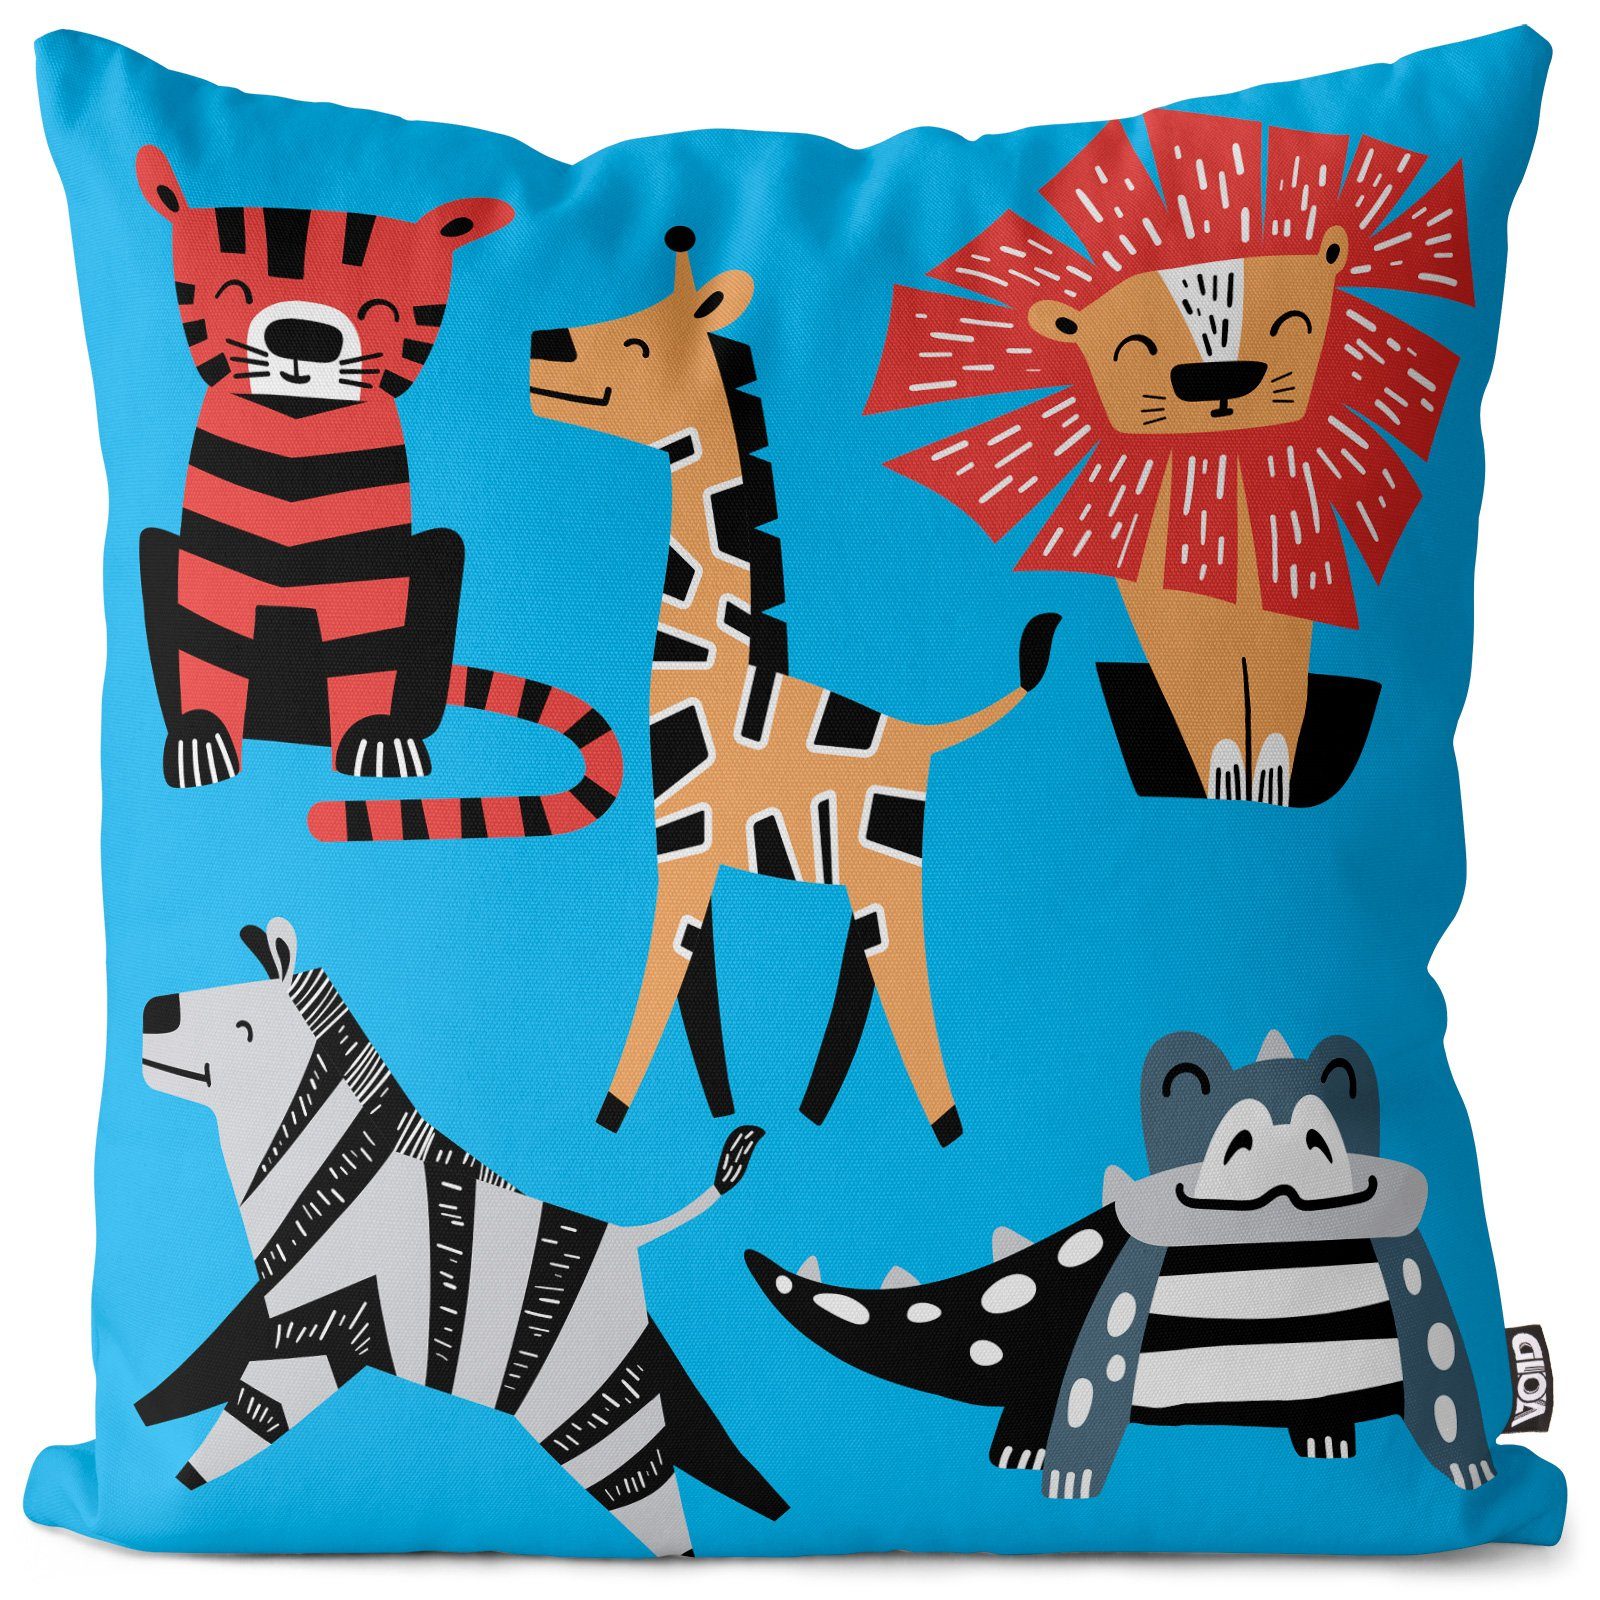 Krokodil VOID Kinder Zootiere Zebra (1 Giraffe Sofa-Kissen Zoo Stück), blau Tiere Kissenbezug, Tiger Af Löwe Kissenbezug